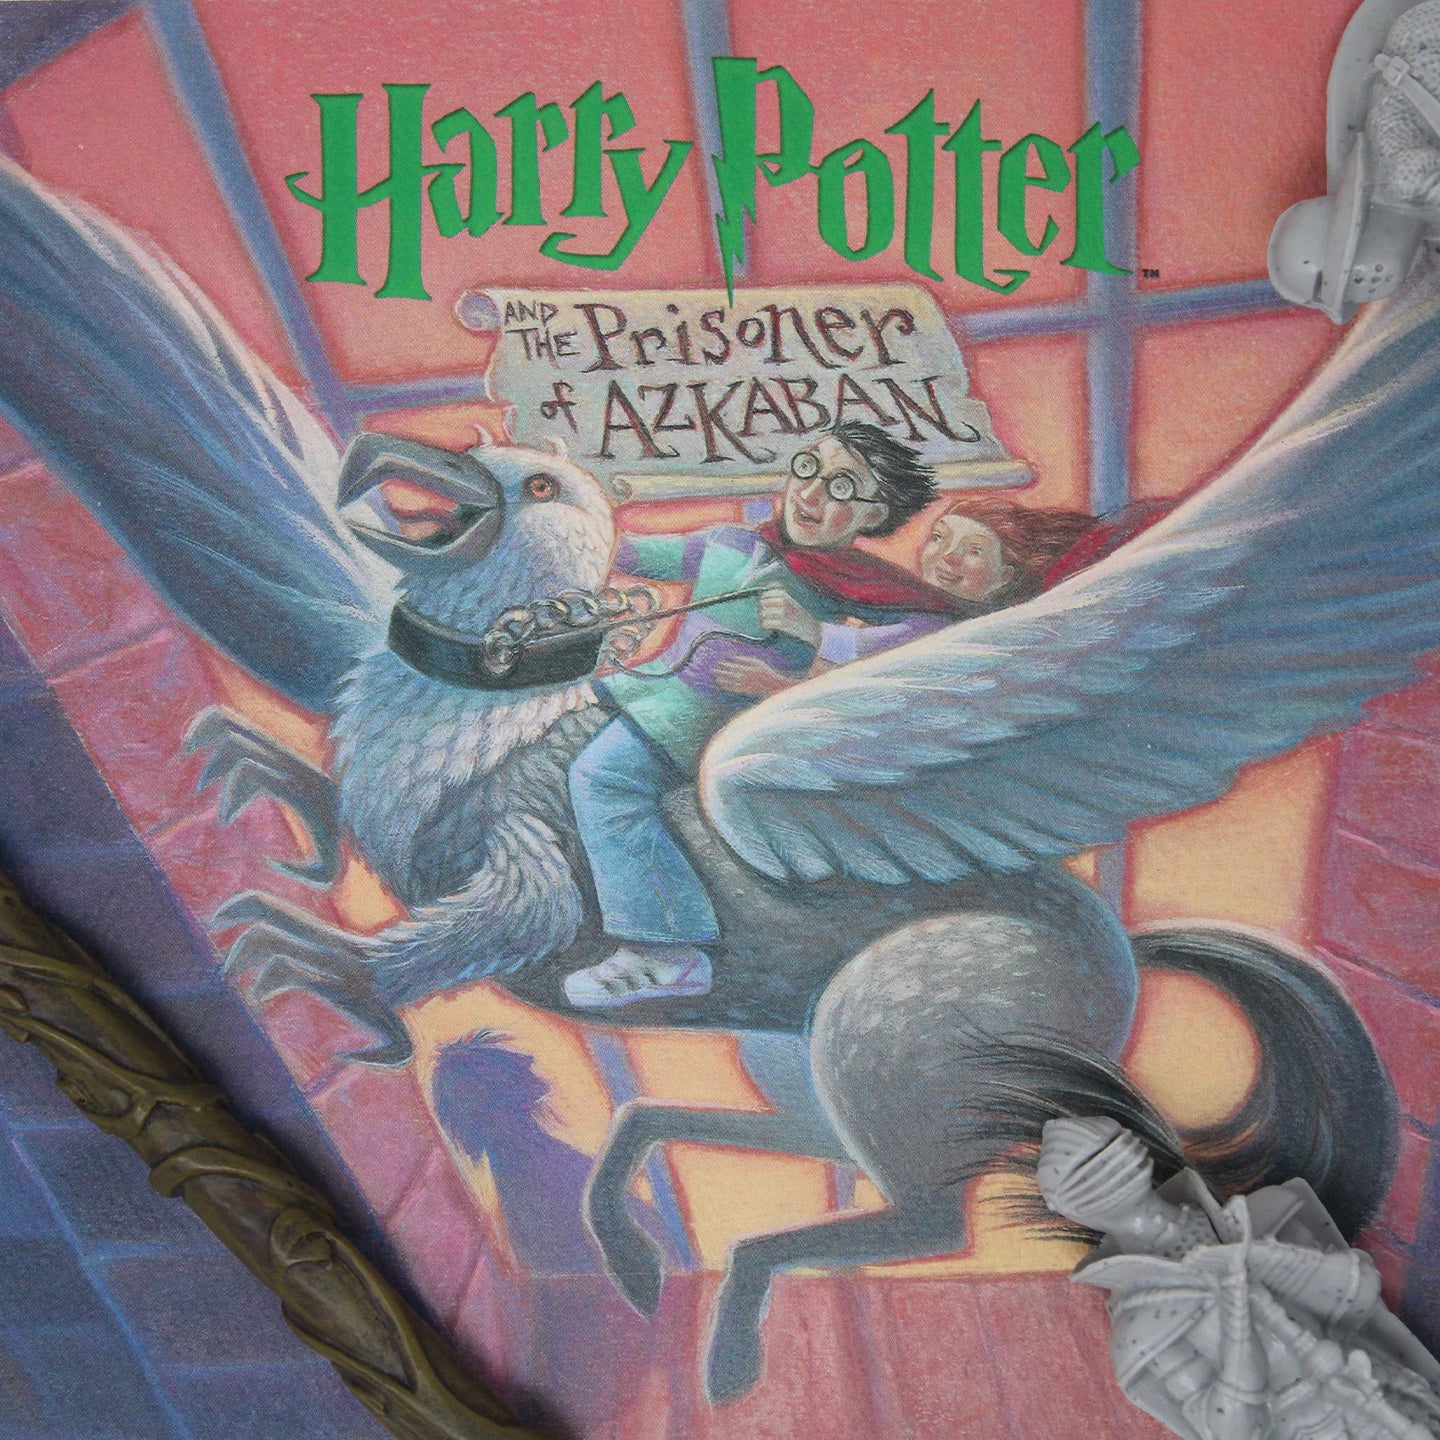 Harry Potter & the Prisoner of Azkaban Book Cover Artwork Limited Edition Art Print